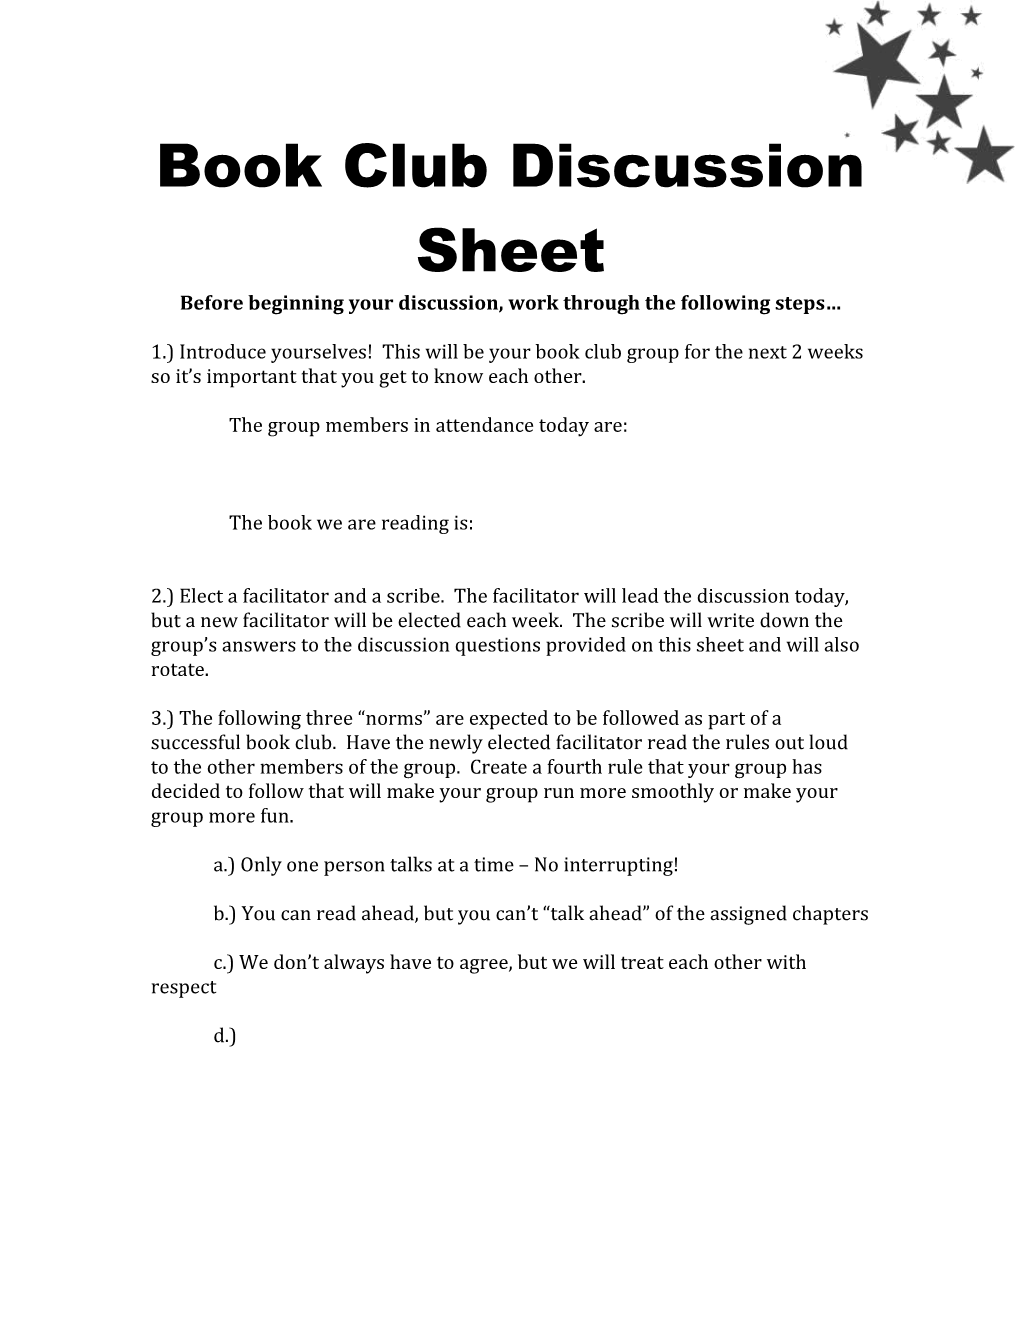 Book Club Discussion Sheet